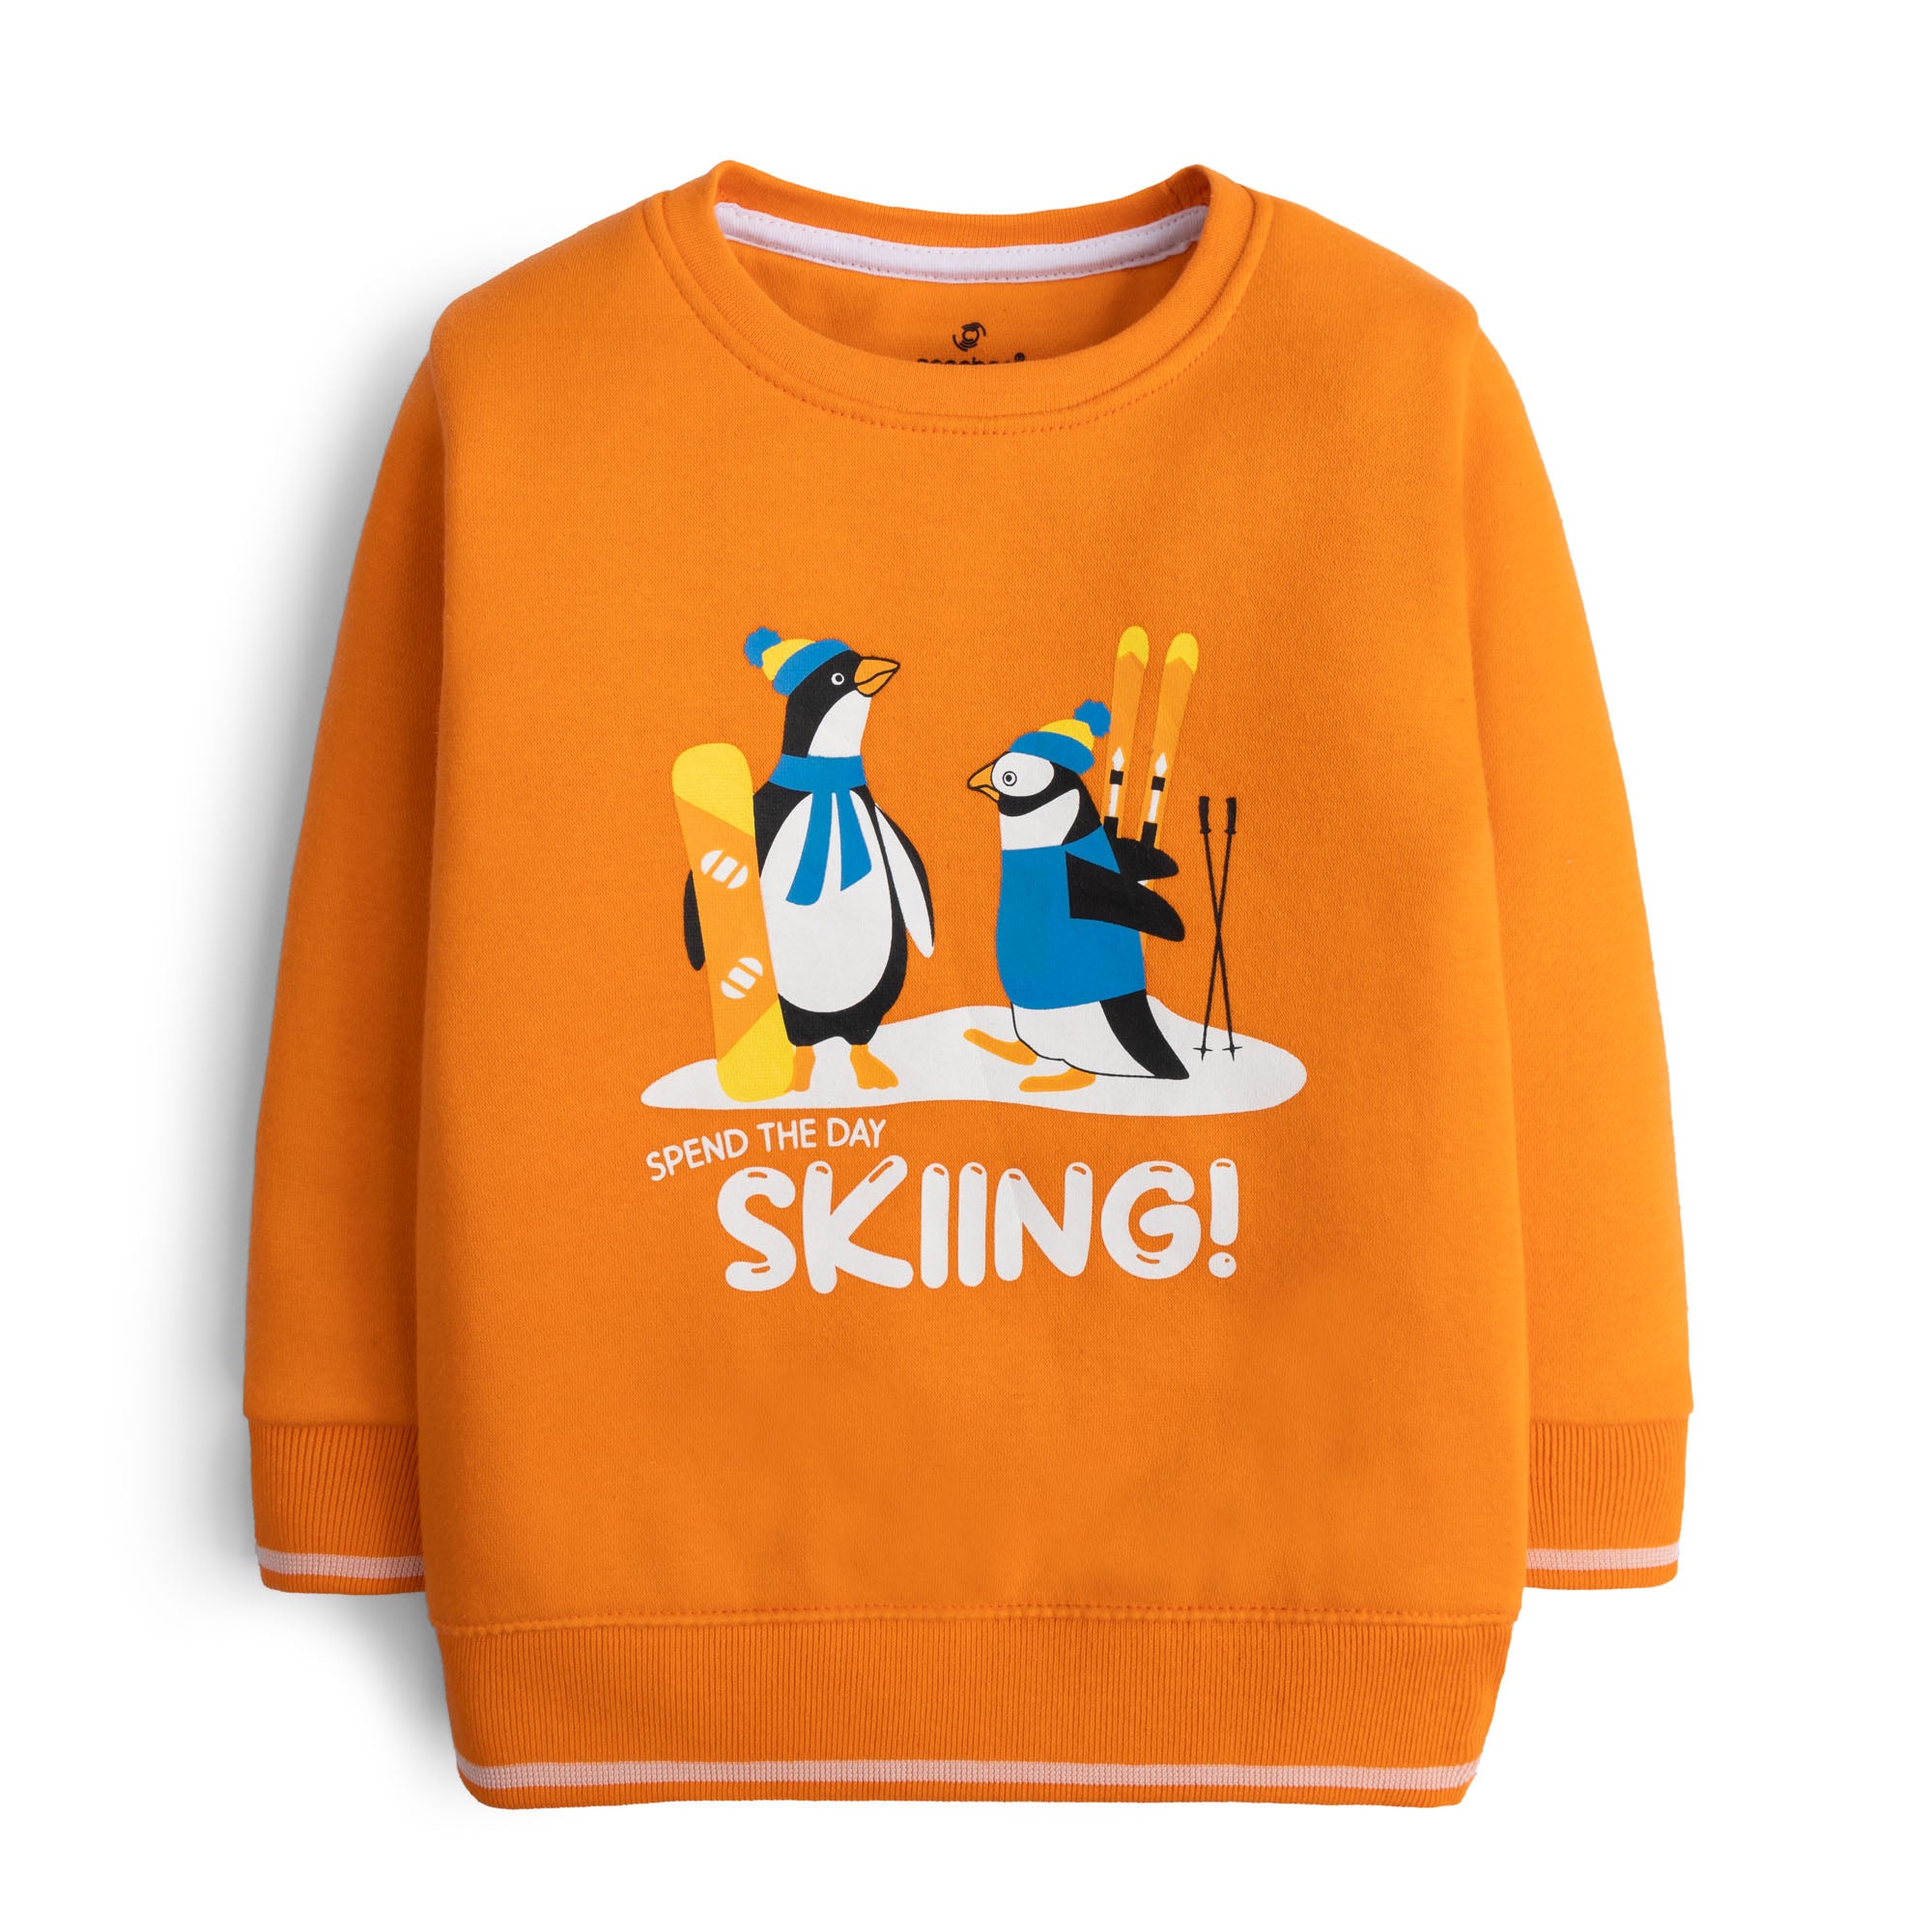 Skiing High Printed Sweatshirt